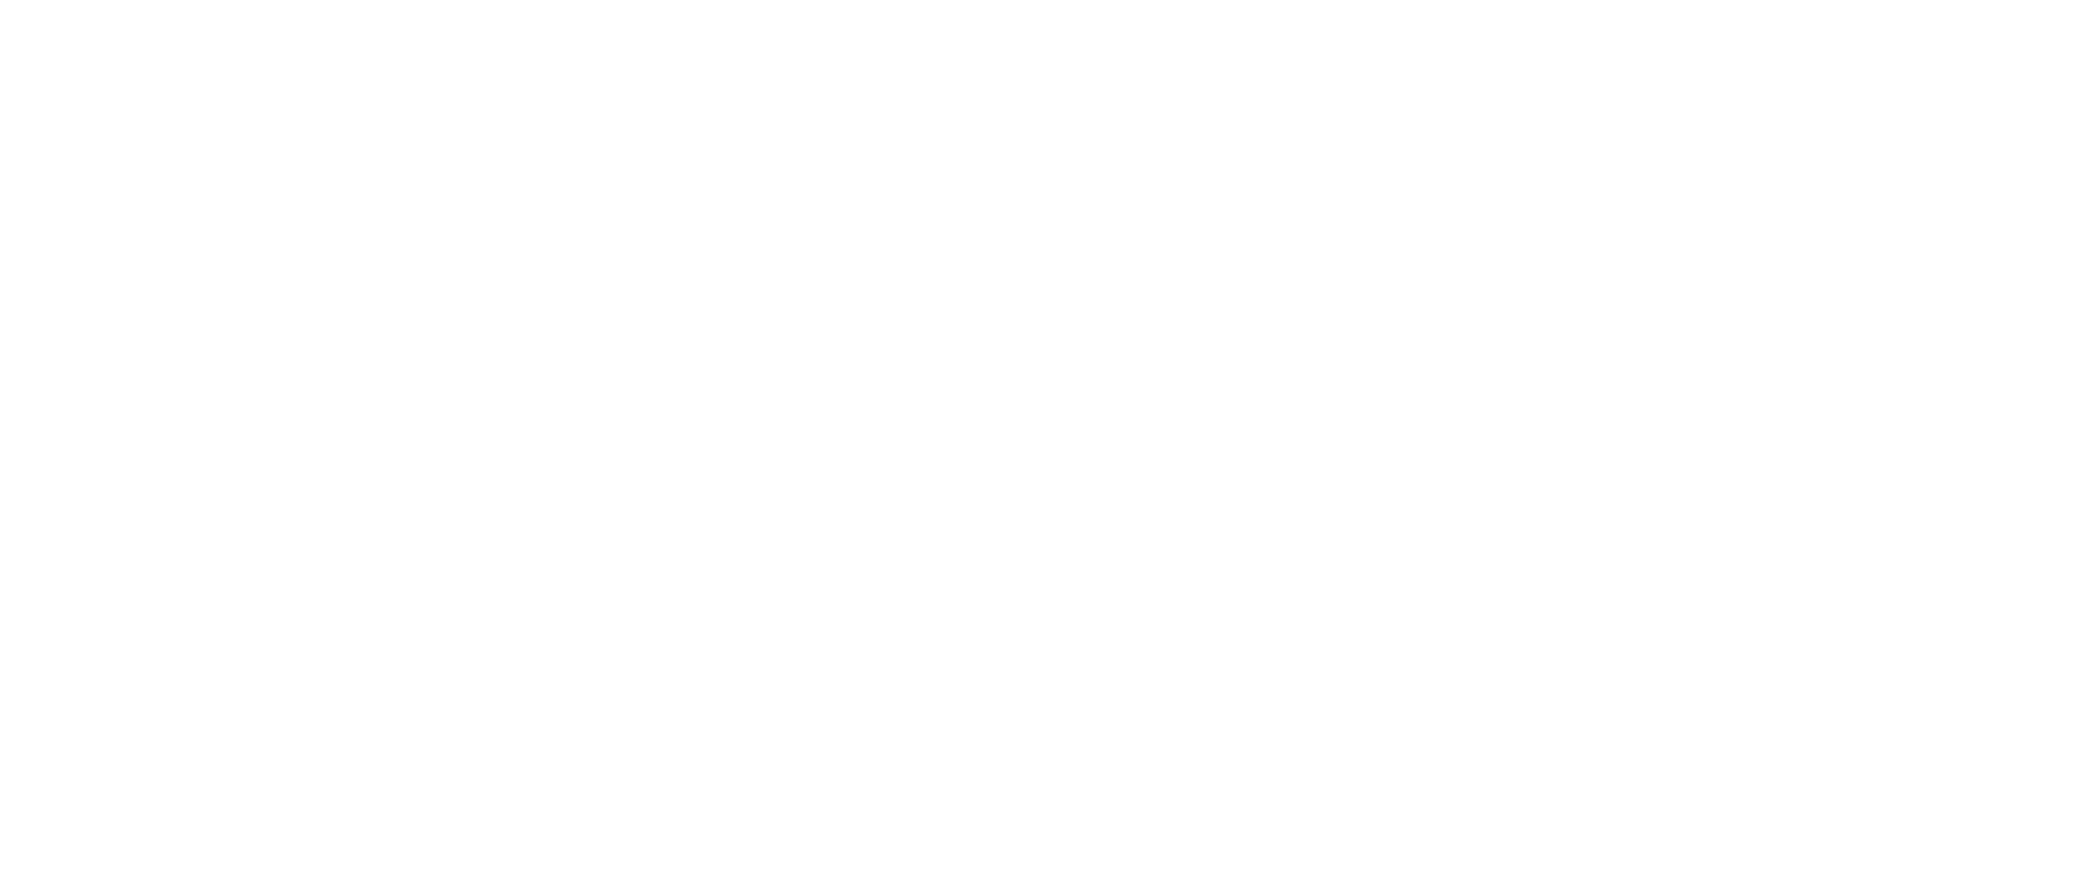 Reibiza | Tienda Ibiza & Formentera